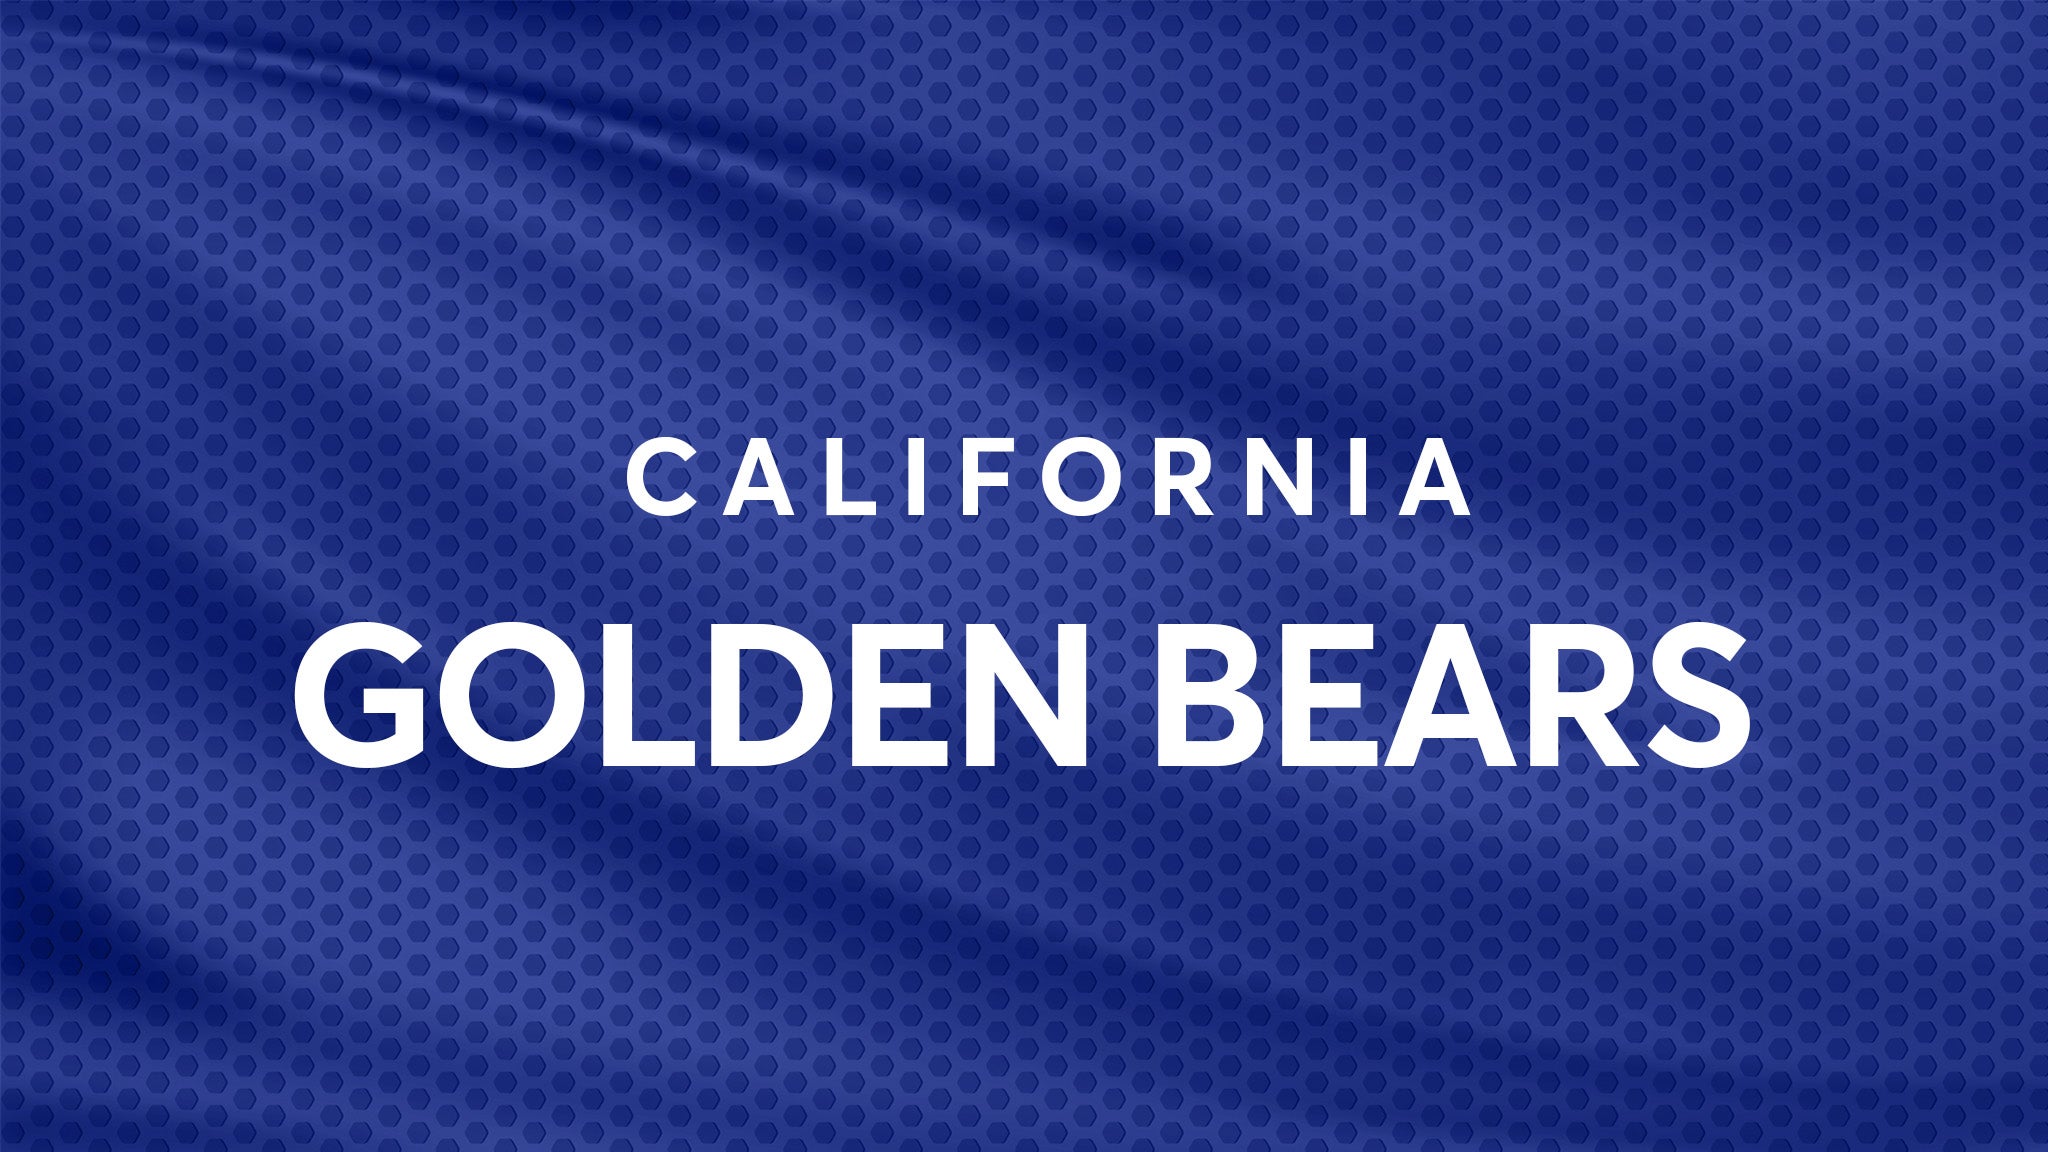 California Golden Bears Football vs. San Diego State Aztecs Football hero